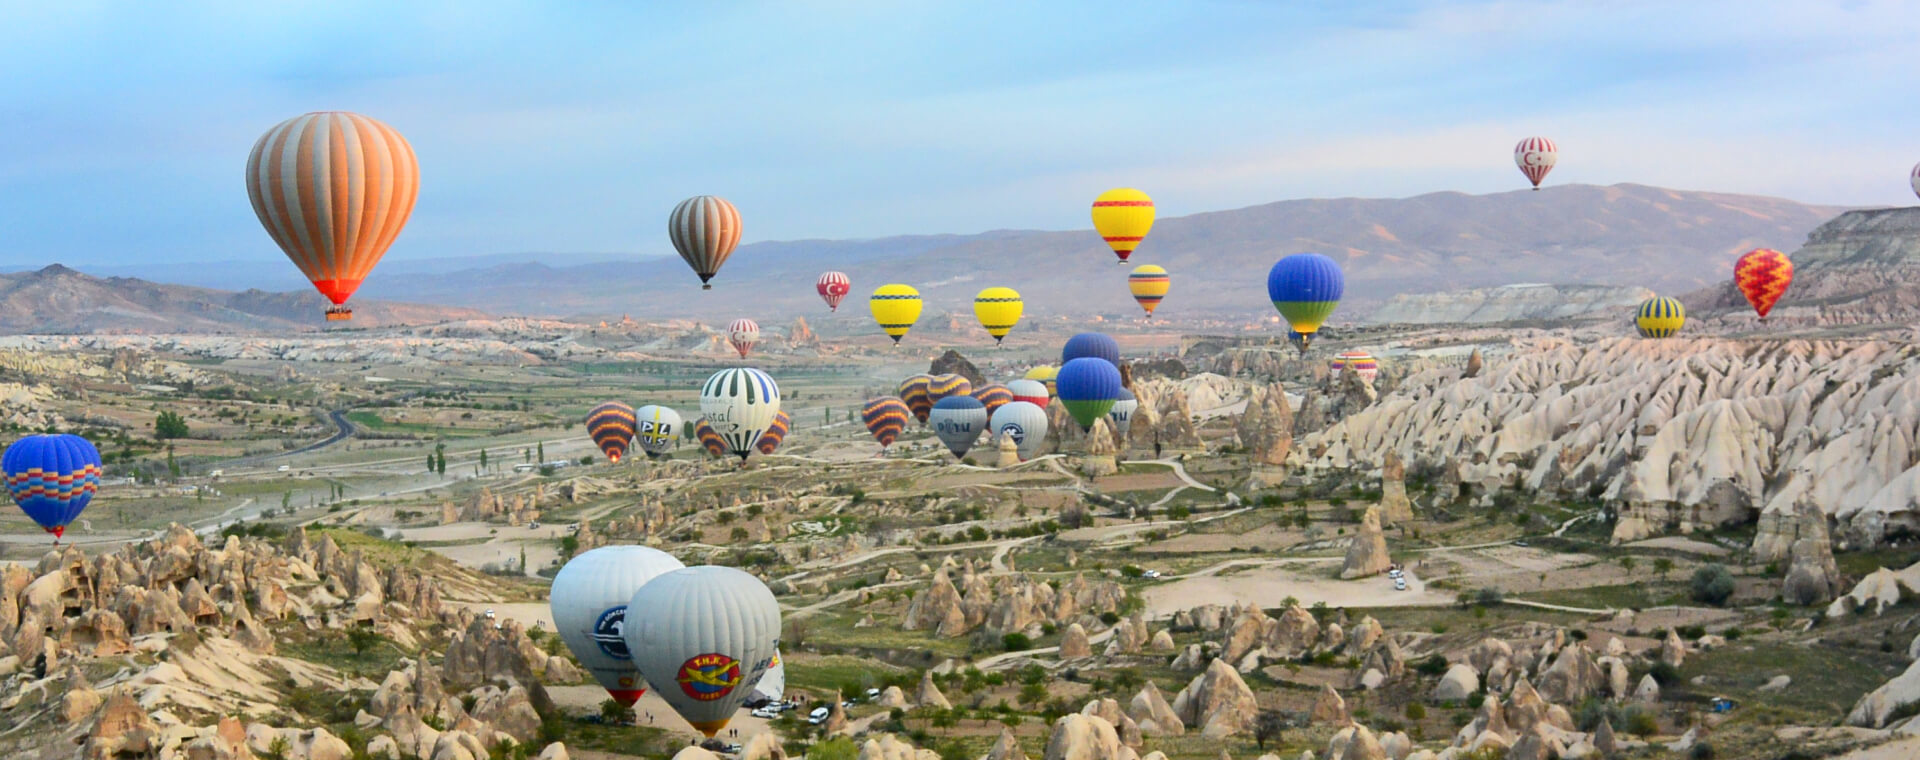 Hot air balloons in cappadocia, turkey.